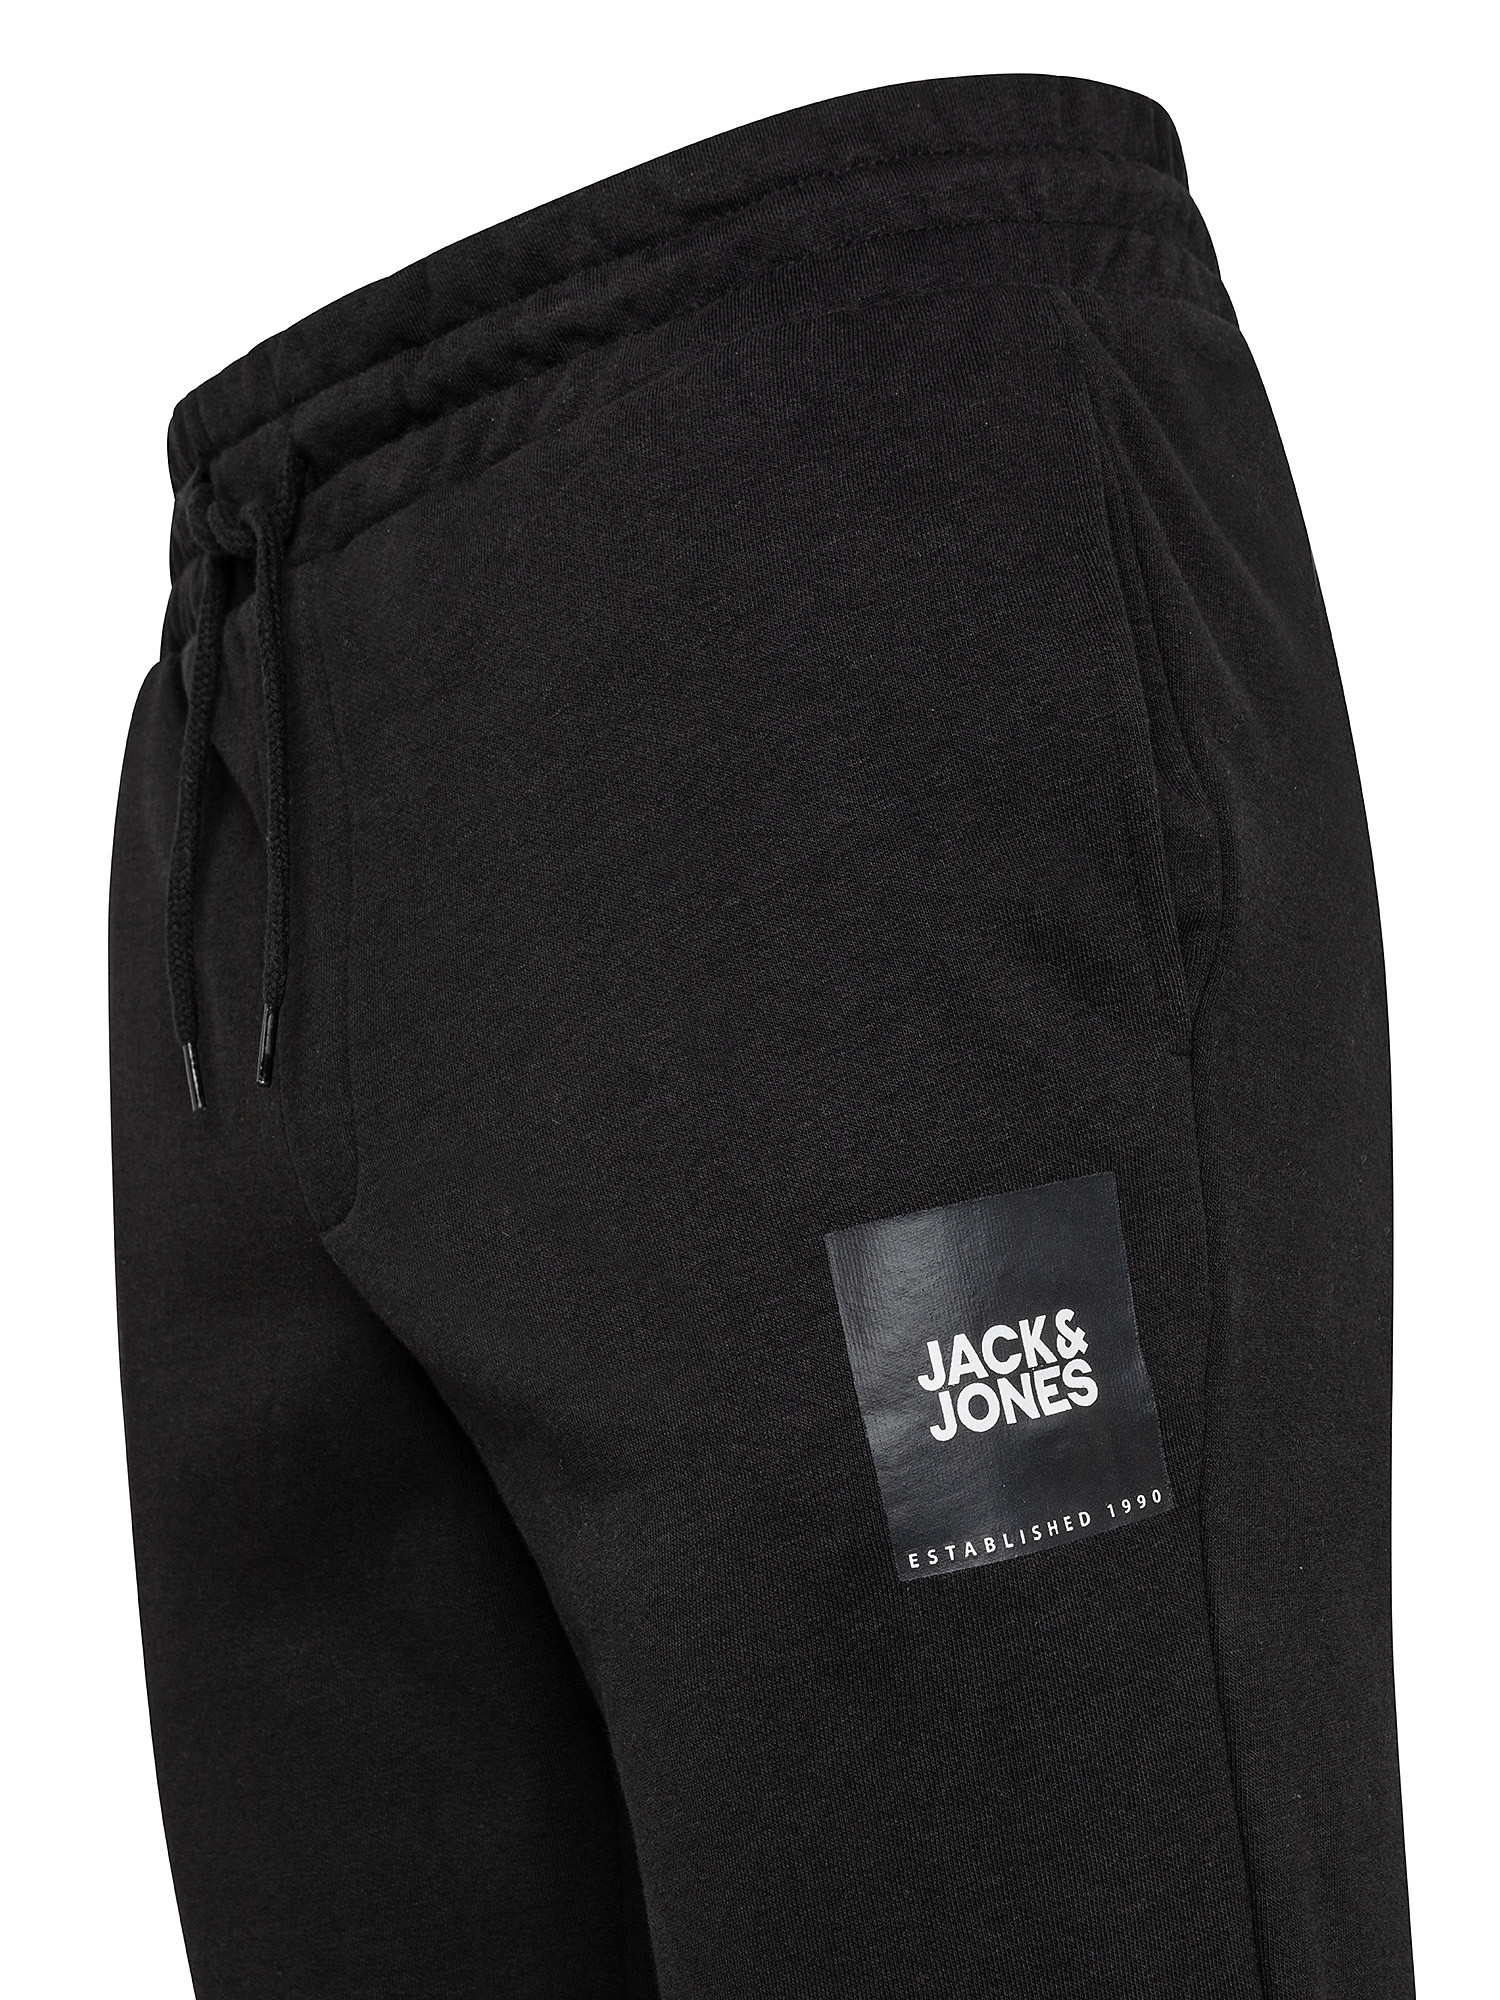 Sweatpants in cotton, Black, large